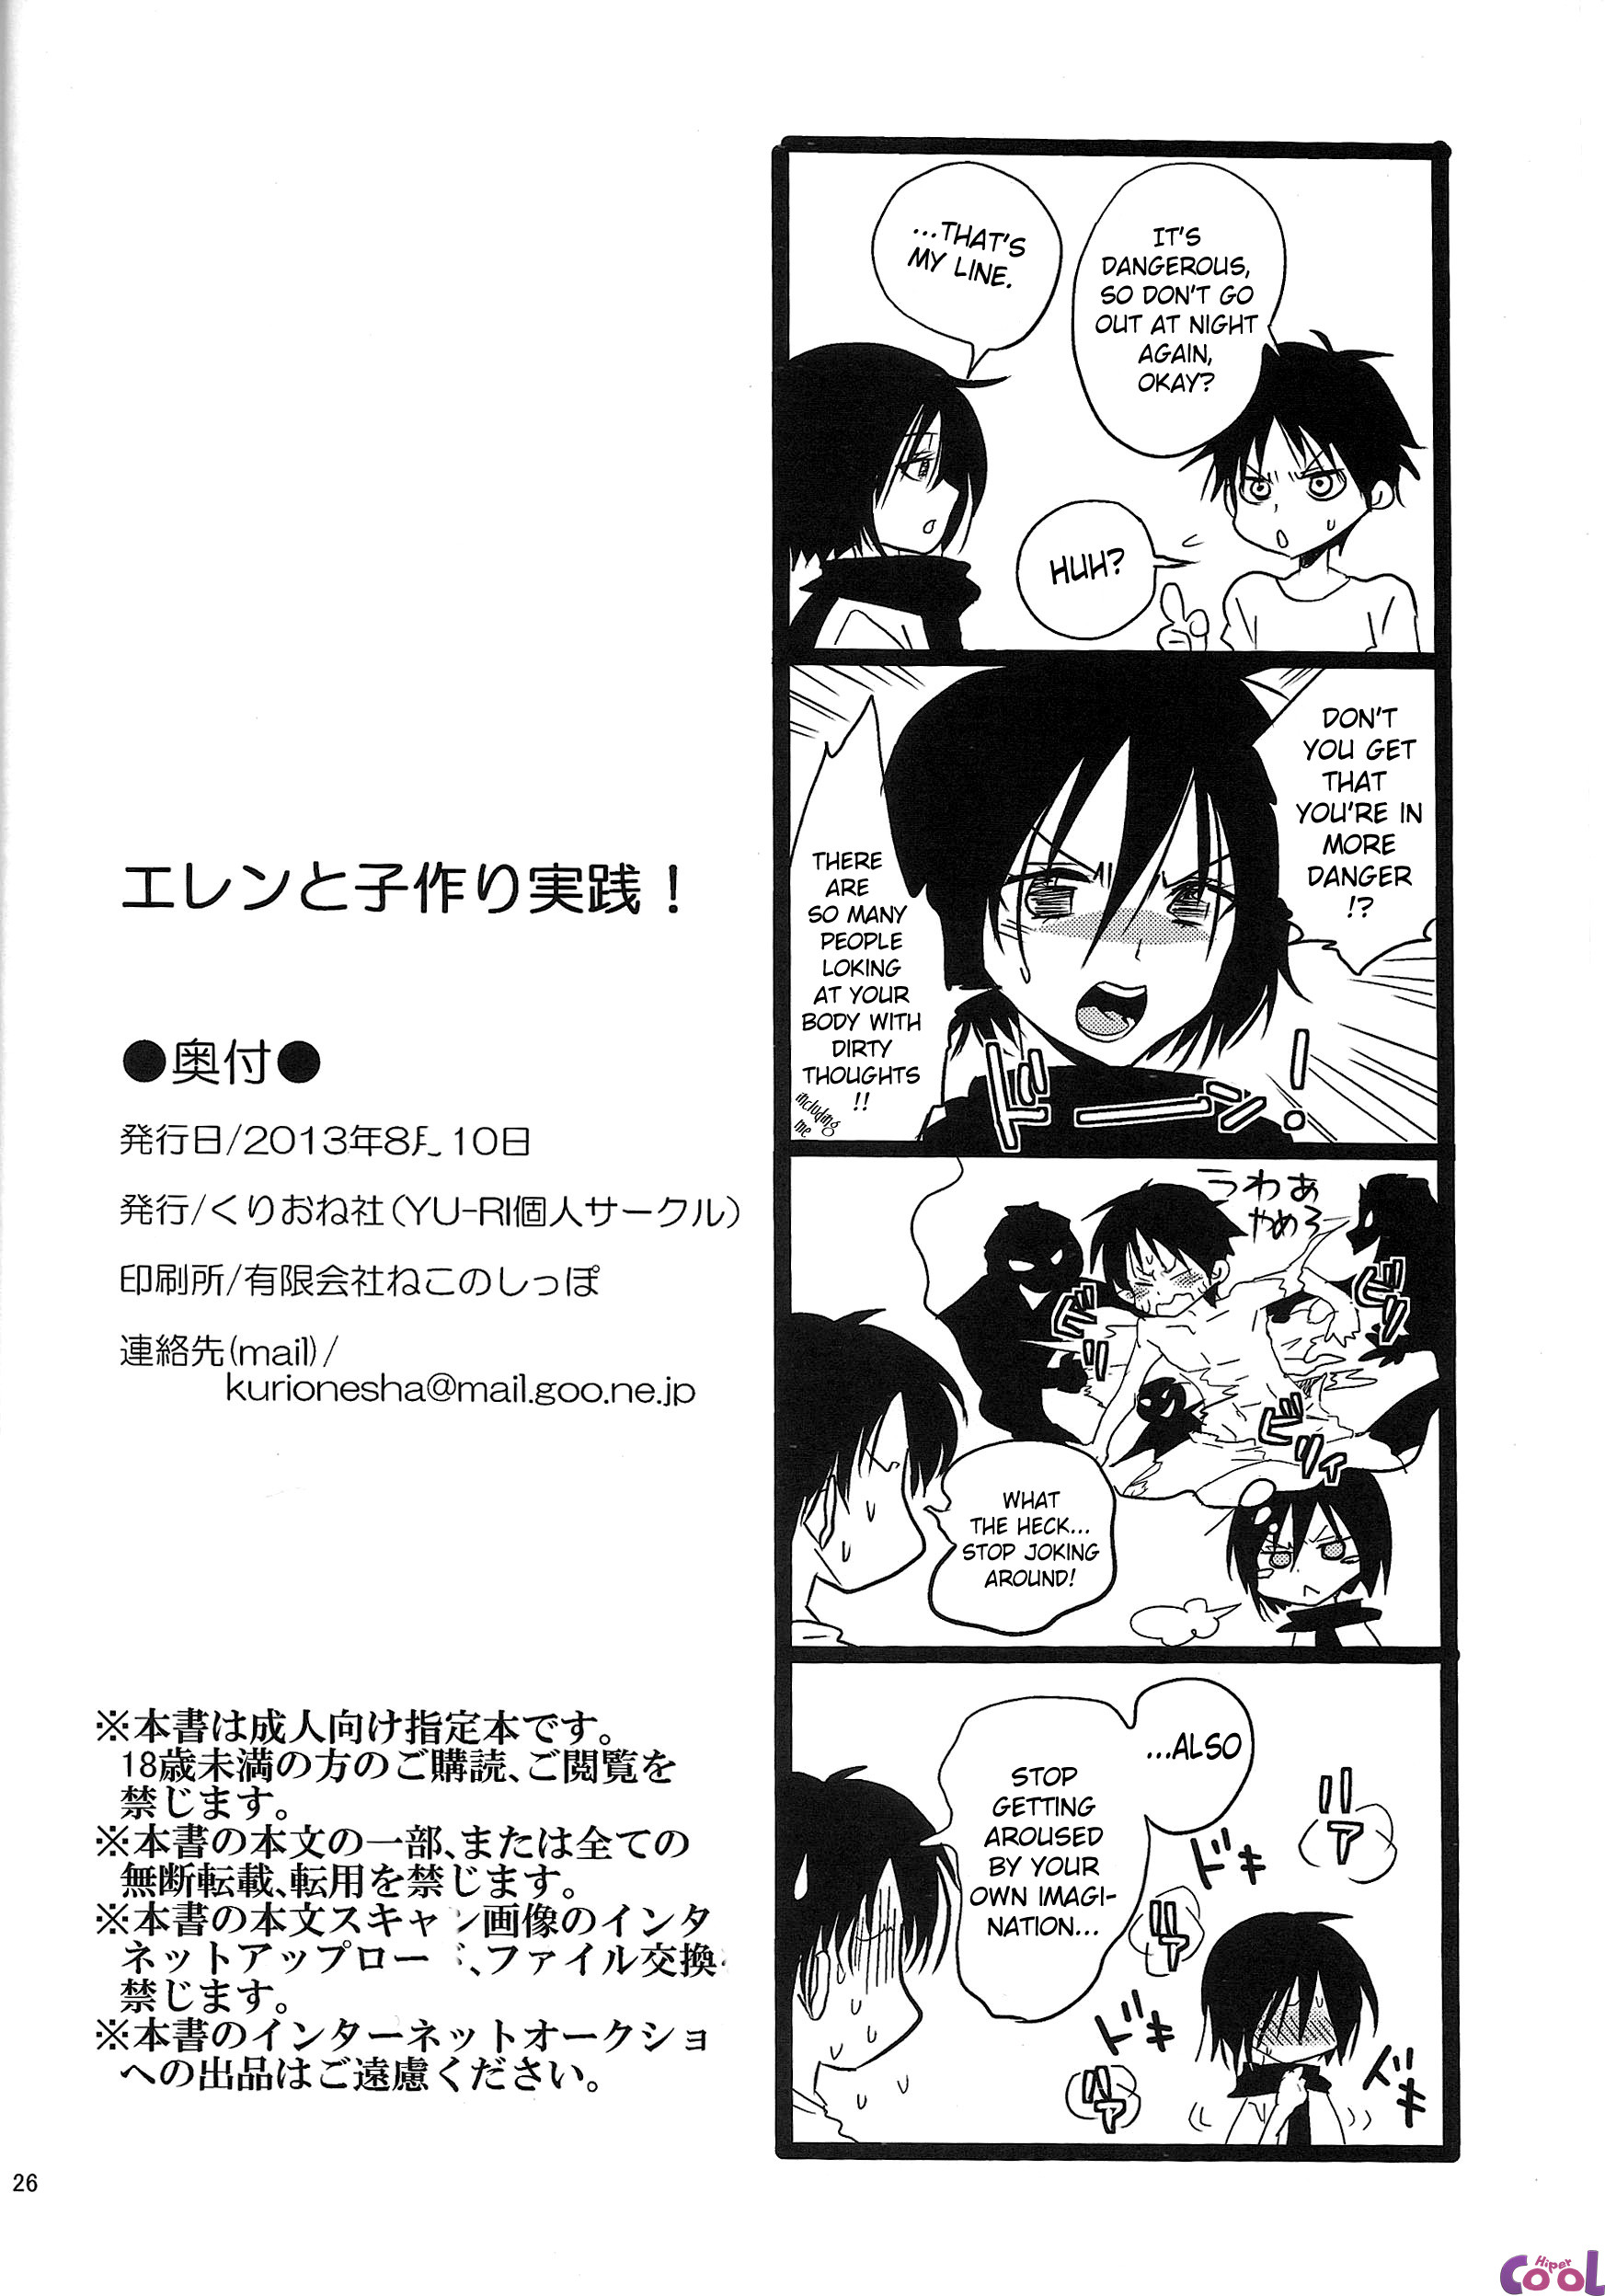 eren-to-kozukuri-jissen-chapter-01-page-25.jpg